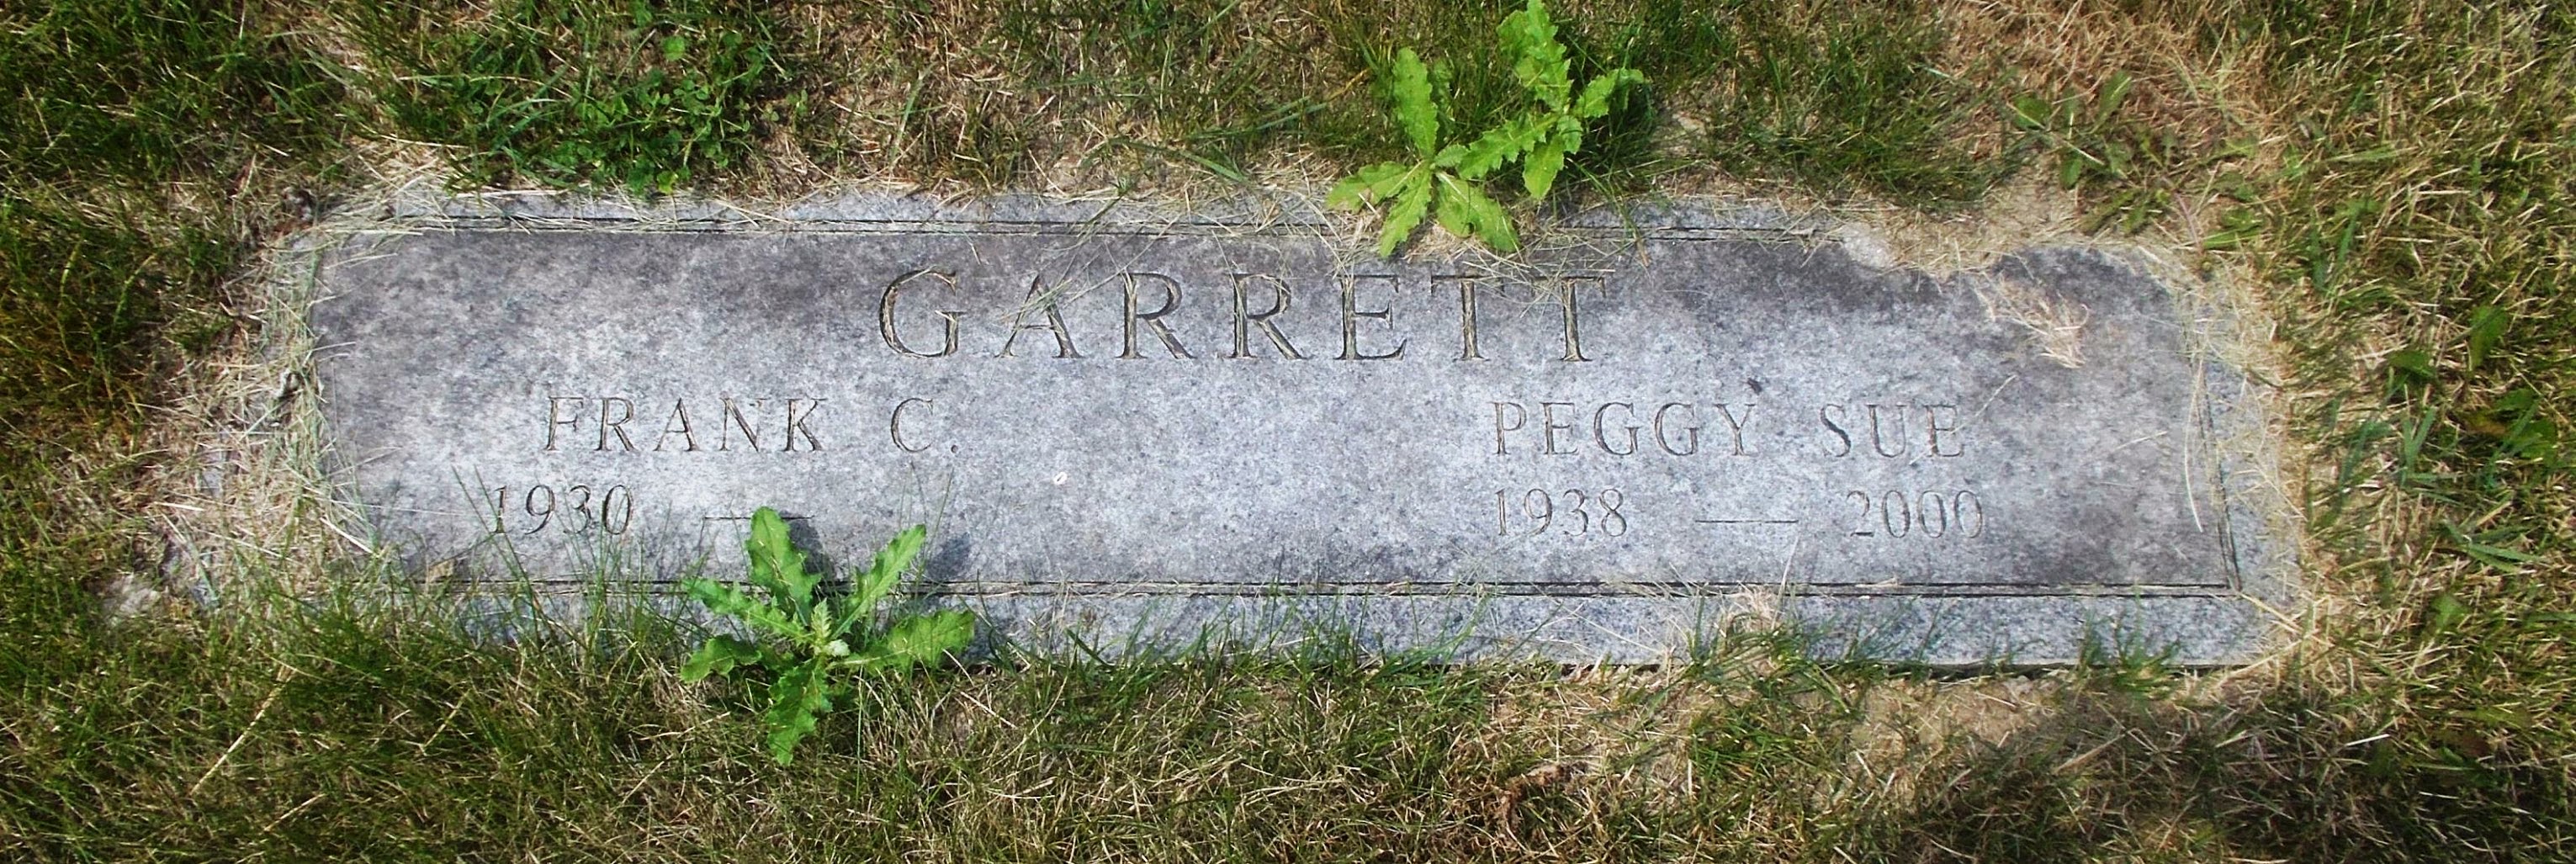 Frank C Garrett